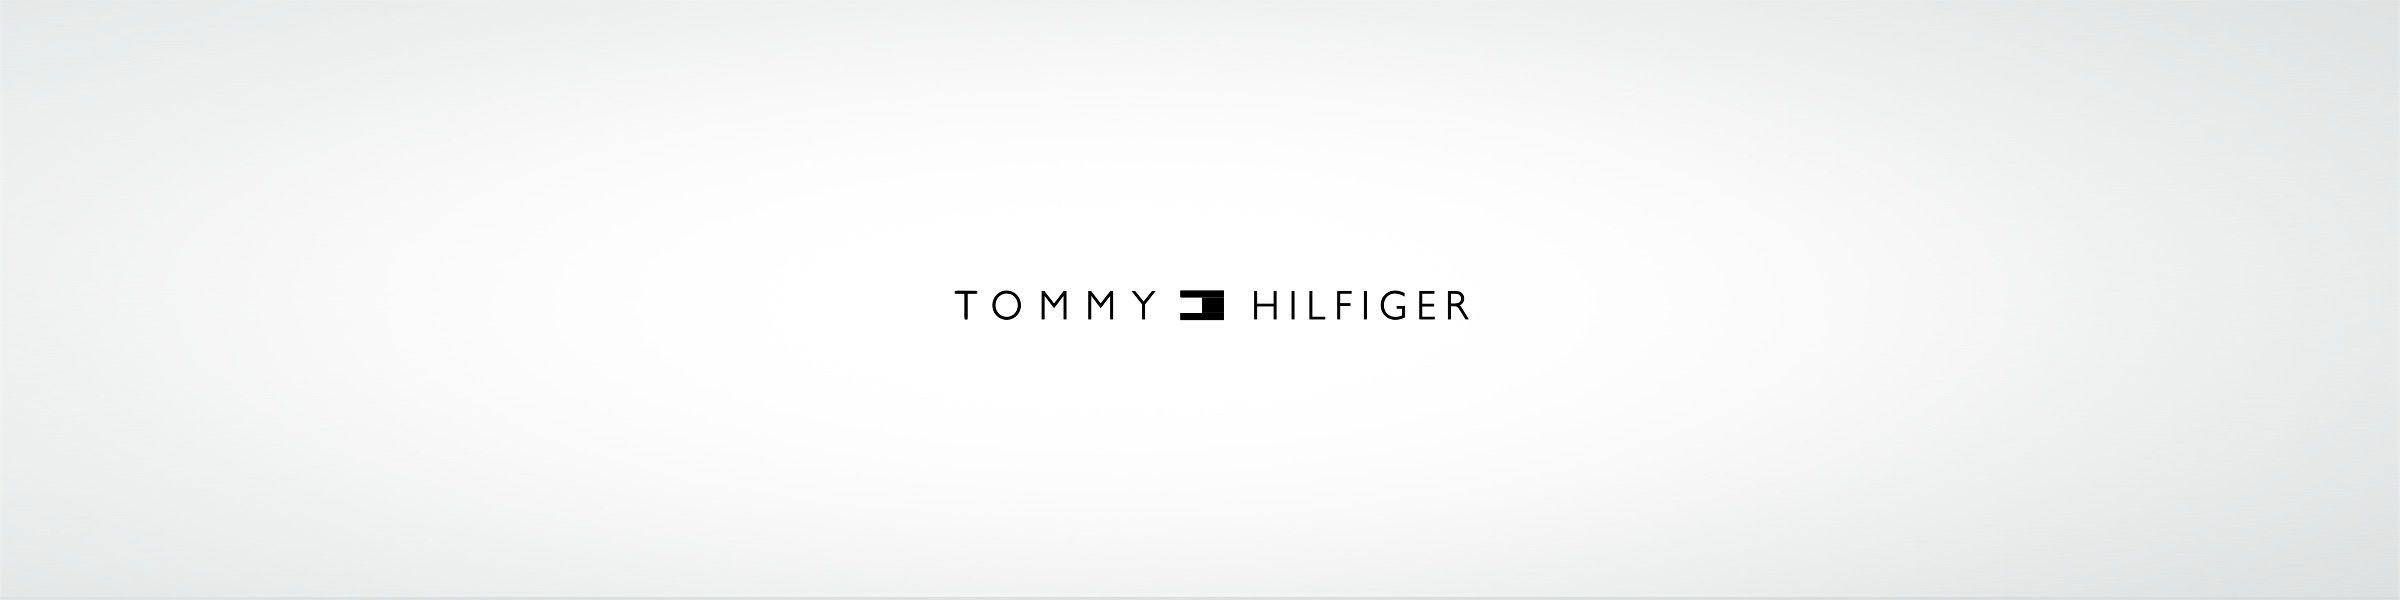 Tommy Hilfiger Black Logo - Brands A Z. Tommy Hilfiger. Women's Clothing & Fashion Accessories